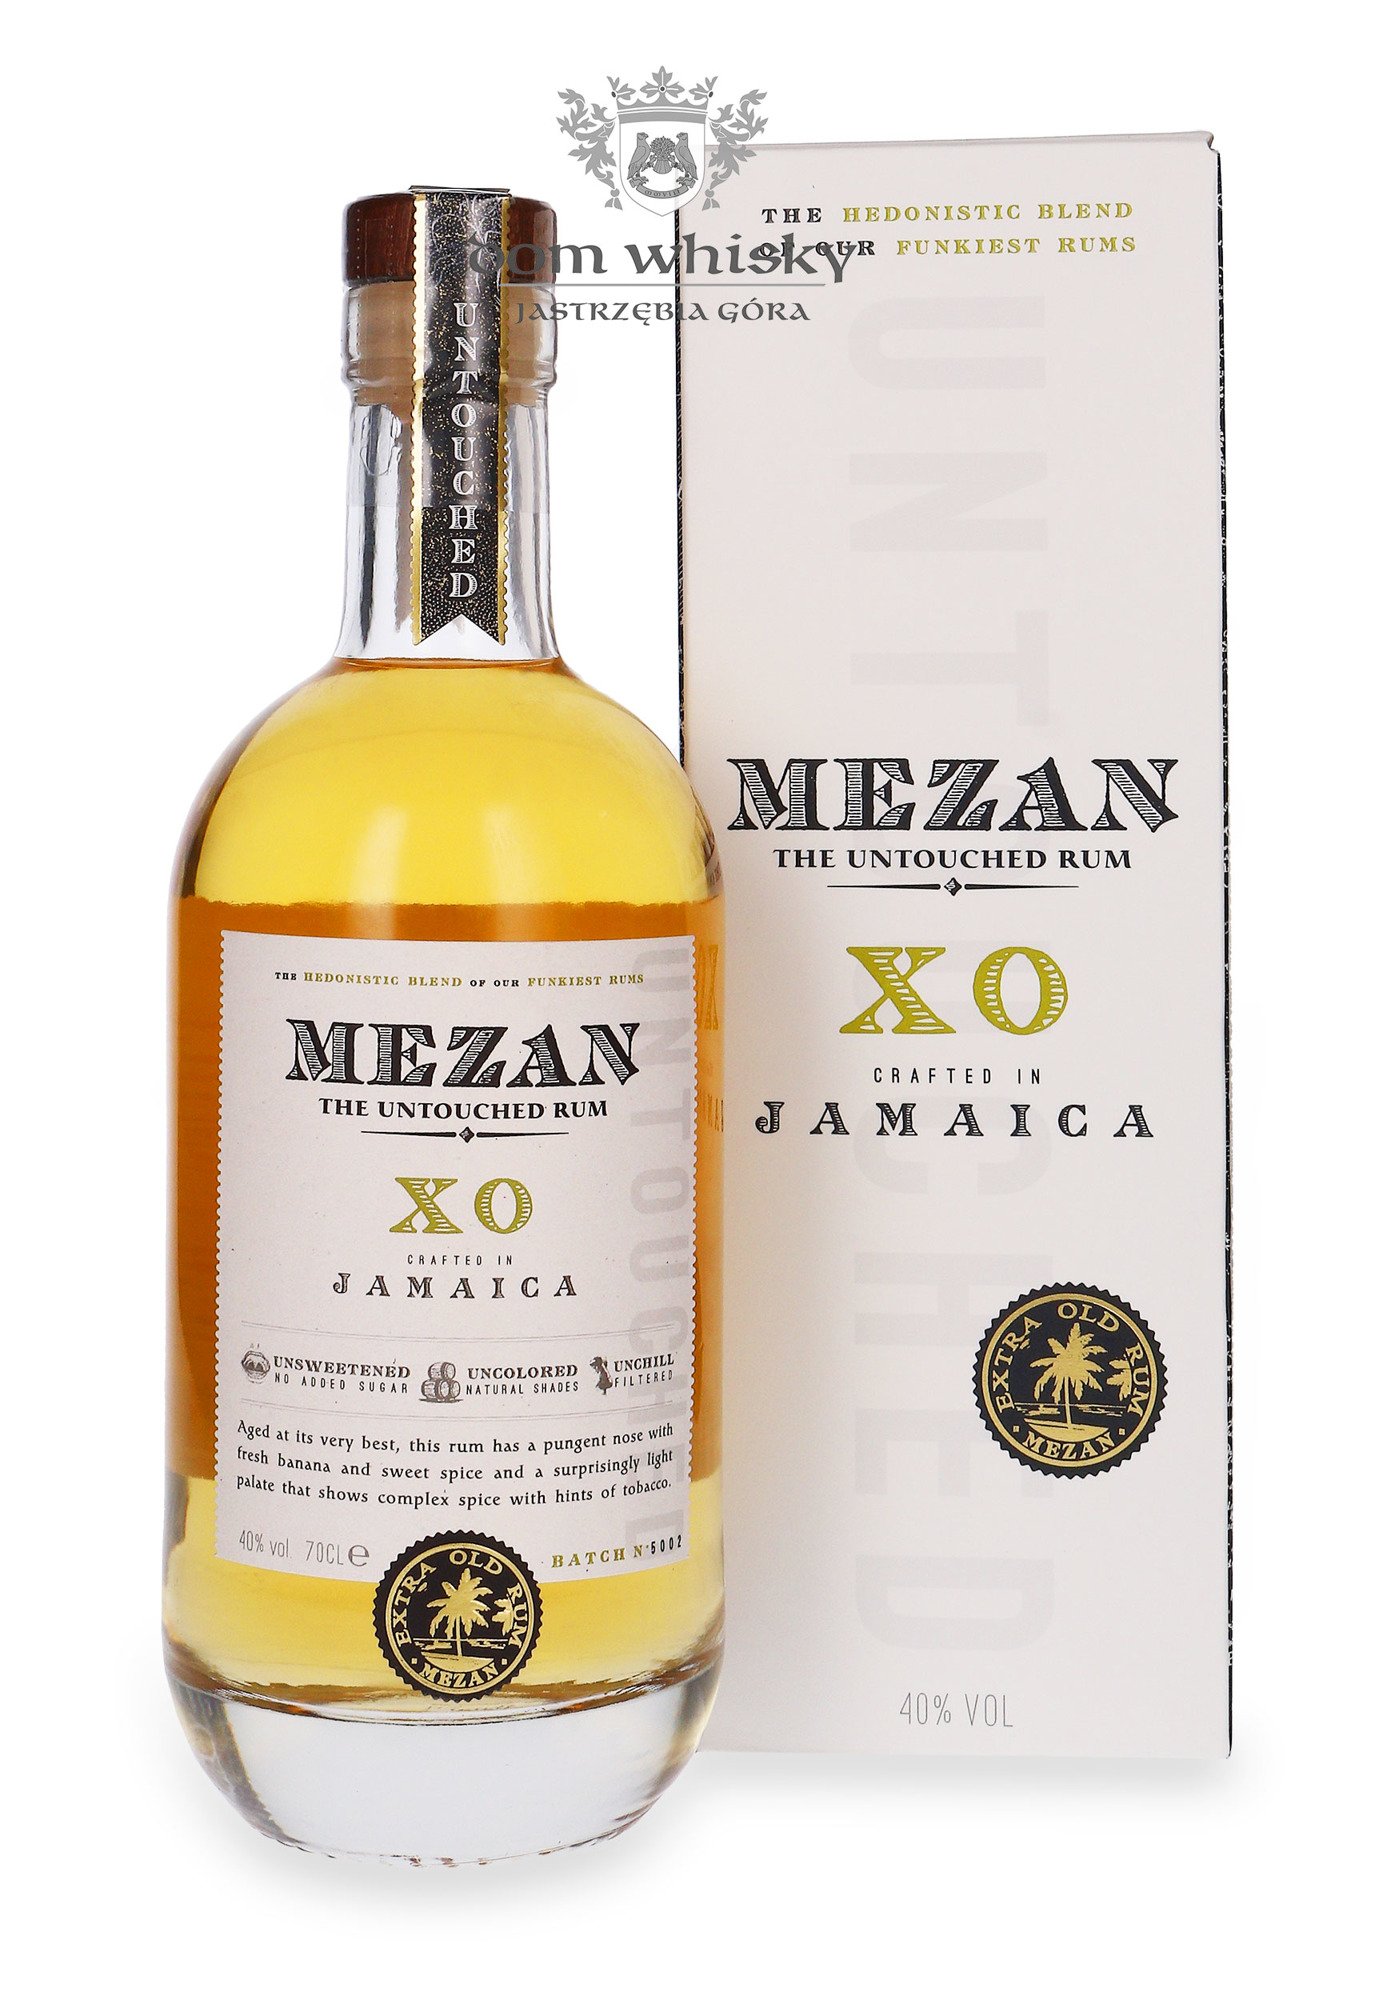 + Untouched Dom Rum / X.O The Whisky 0,7l Jamaica | 40% / Mezan kartonik